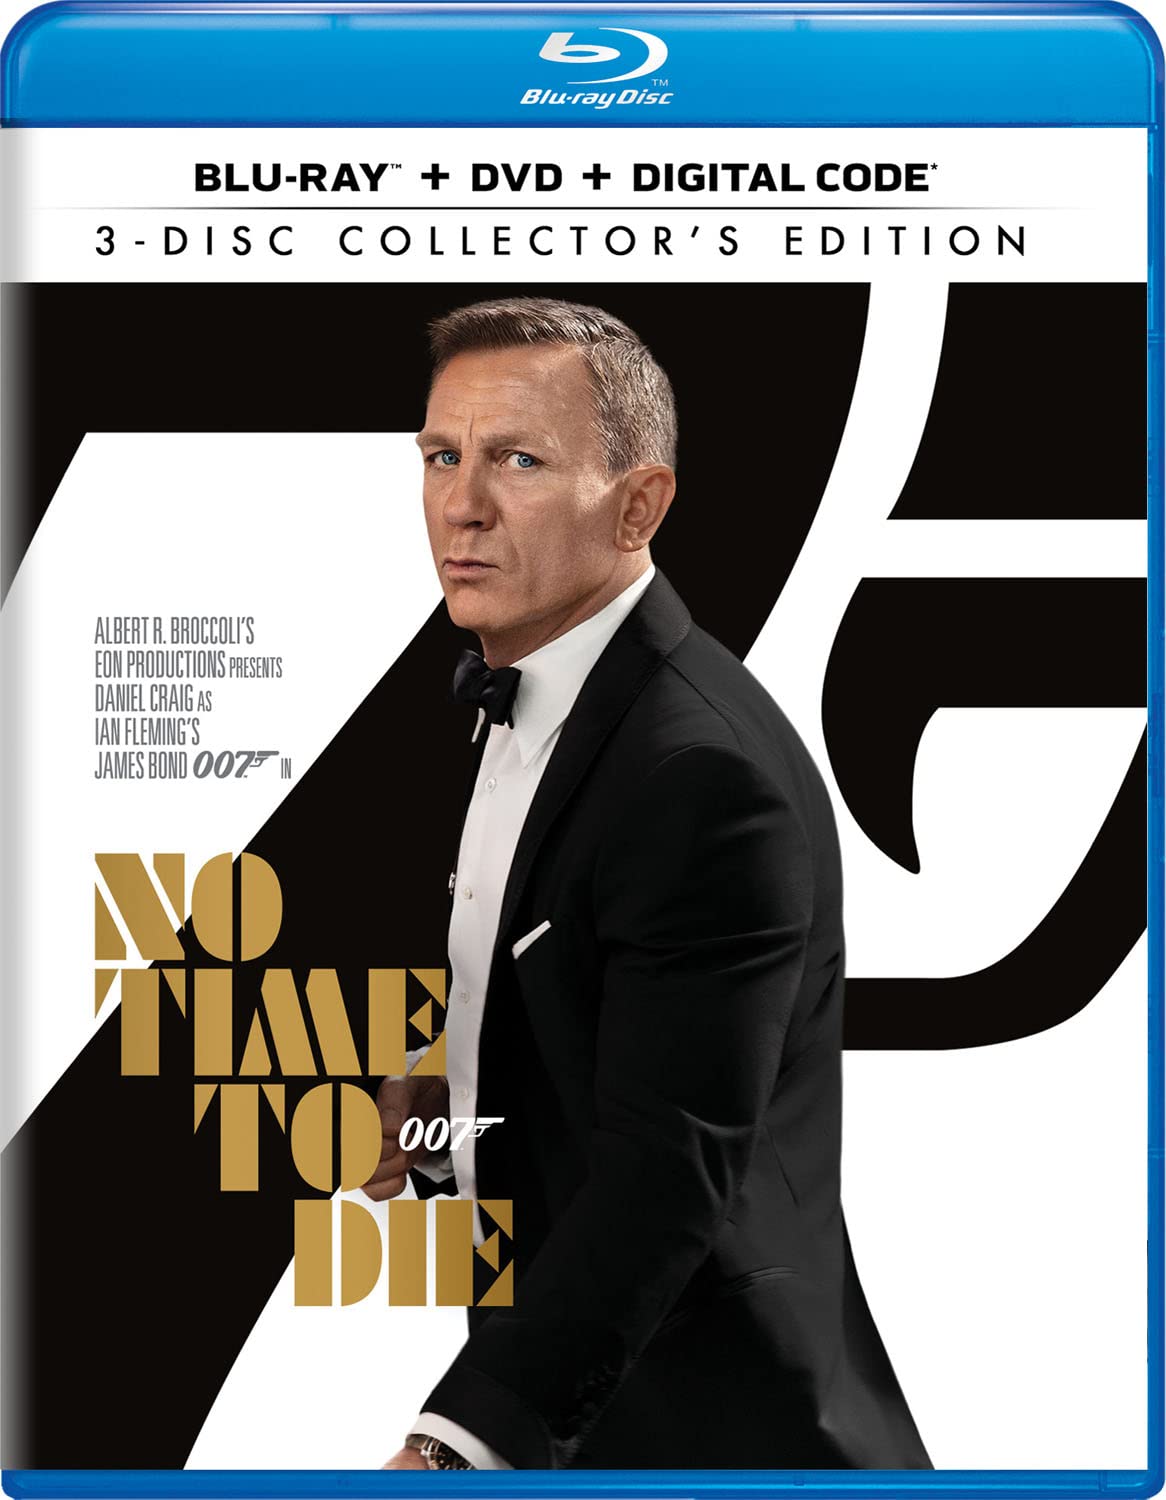 007: No Time To Die - Darkside Records